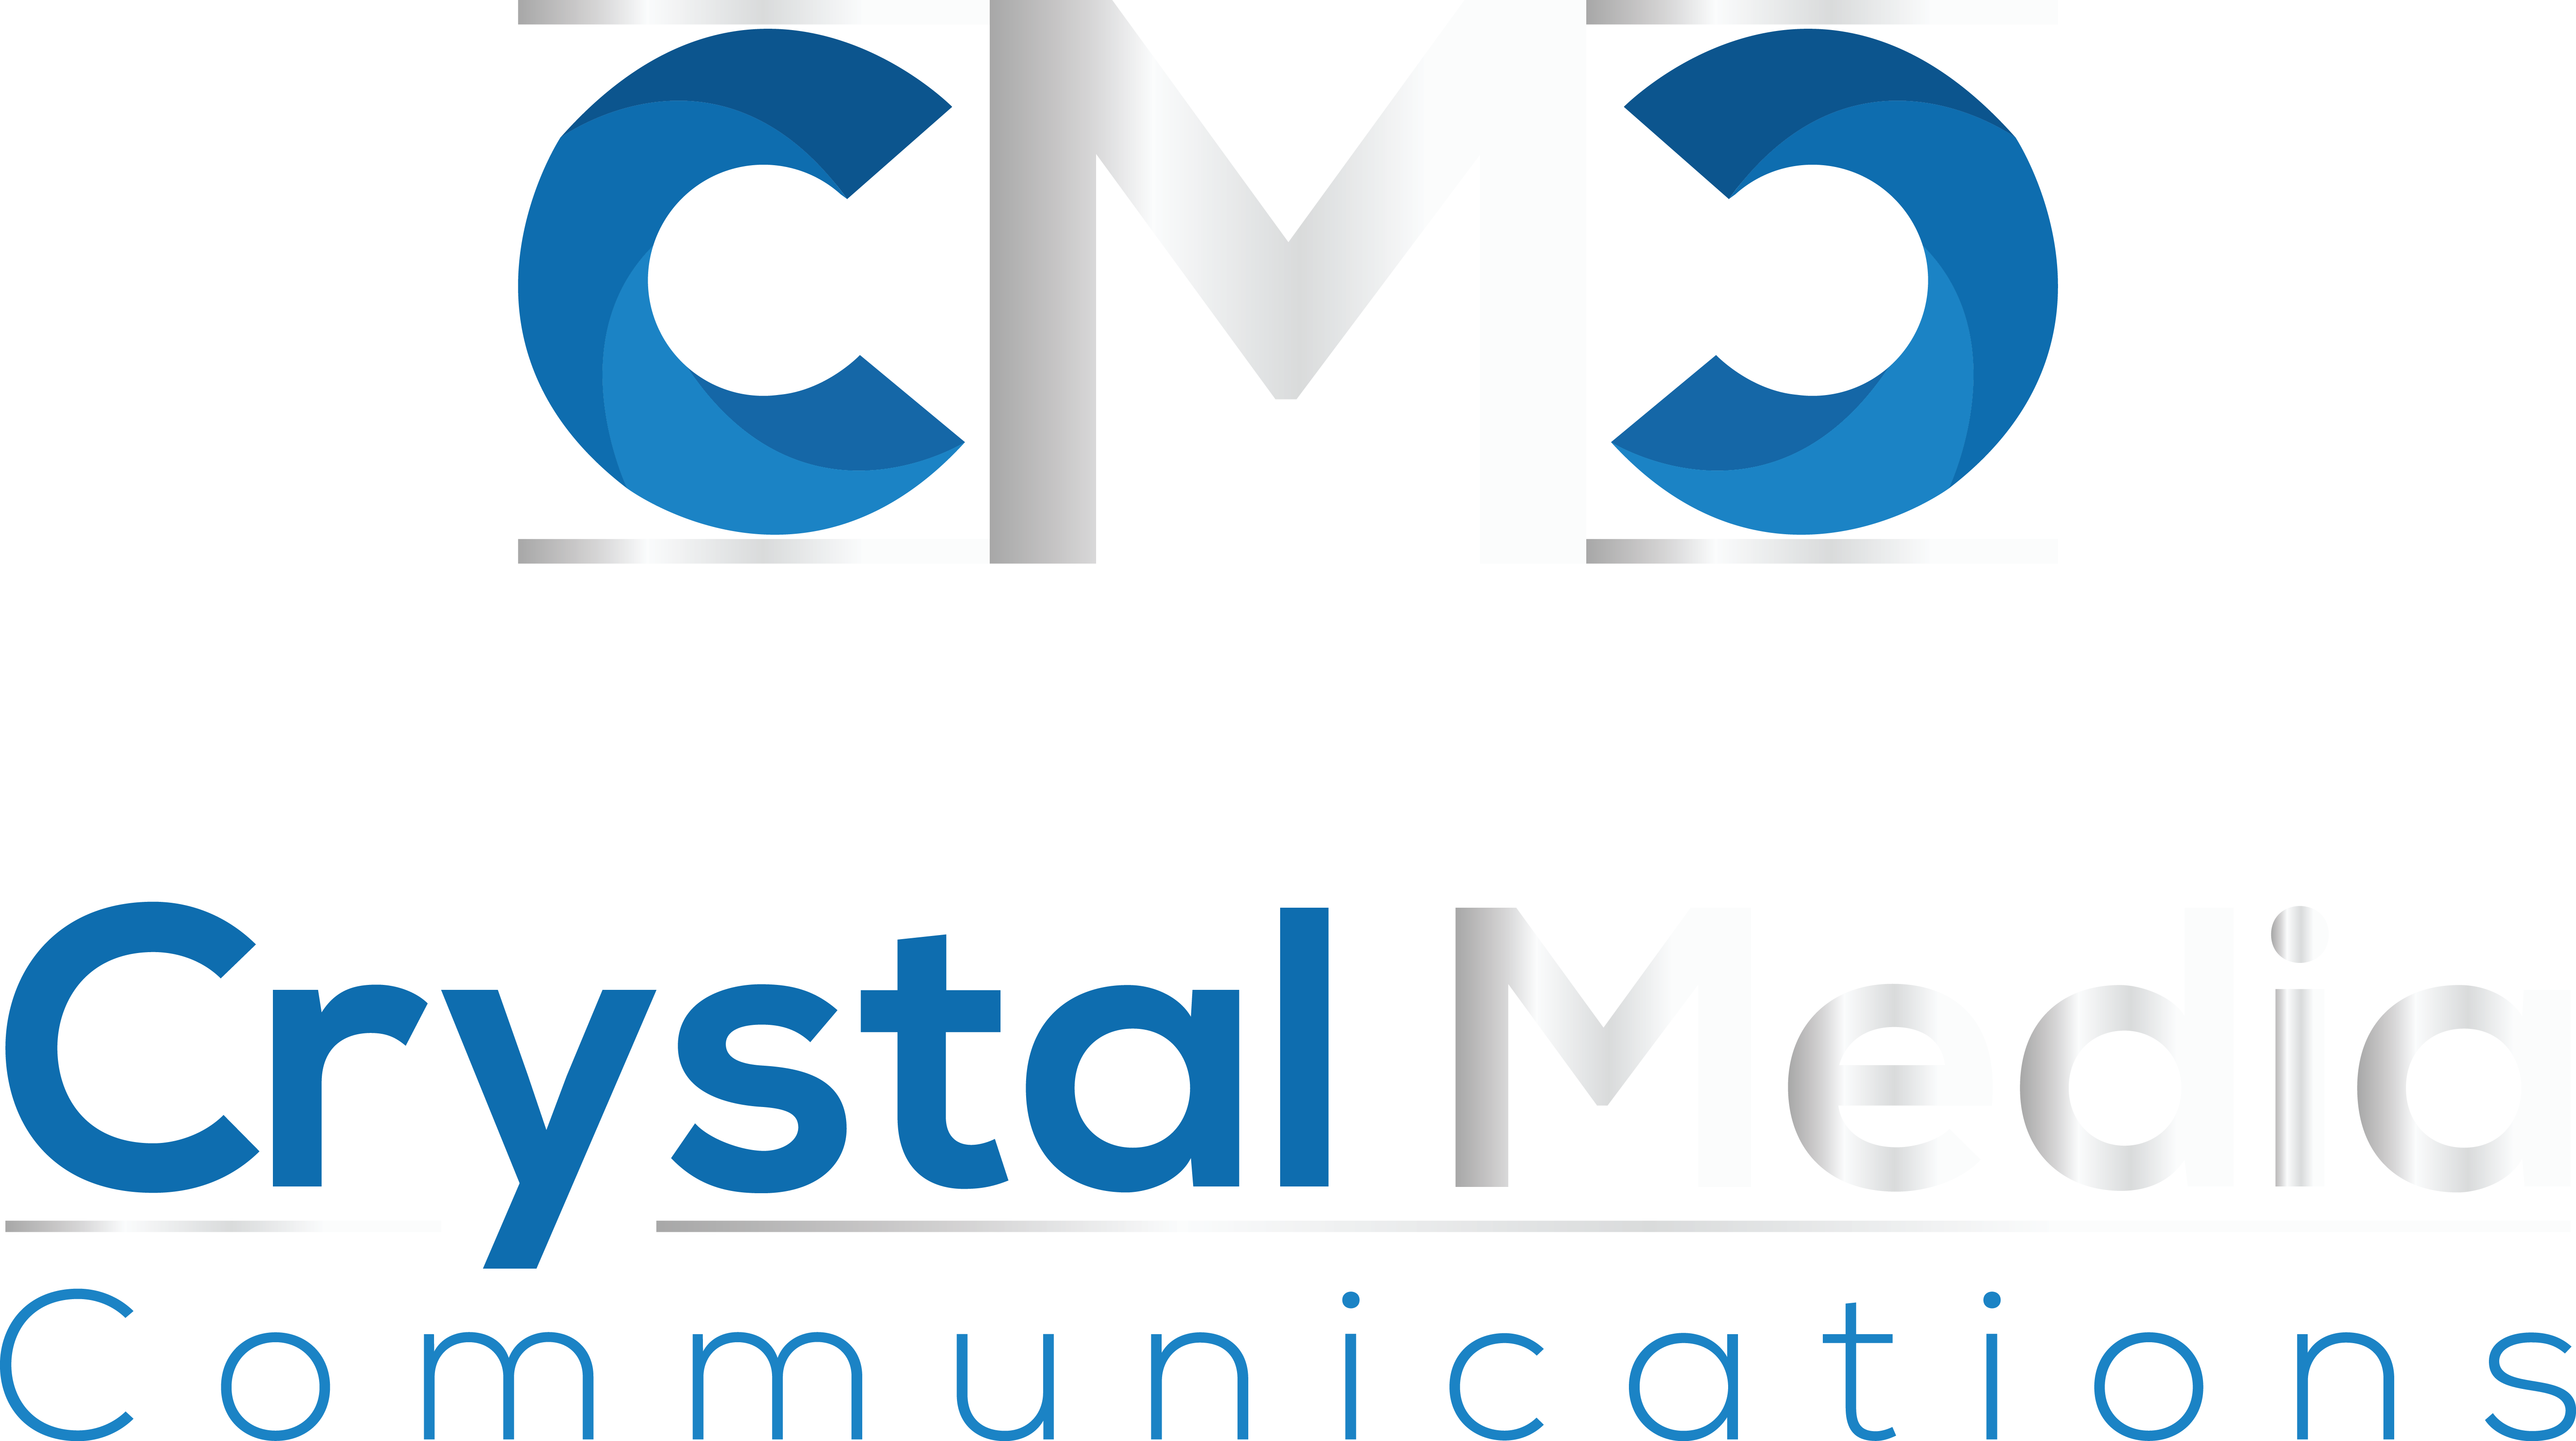 Crystal Media Communications